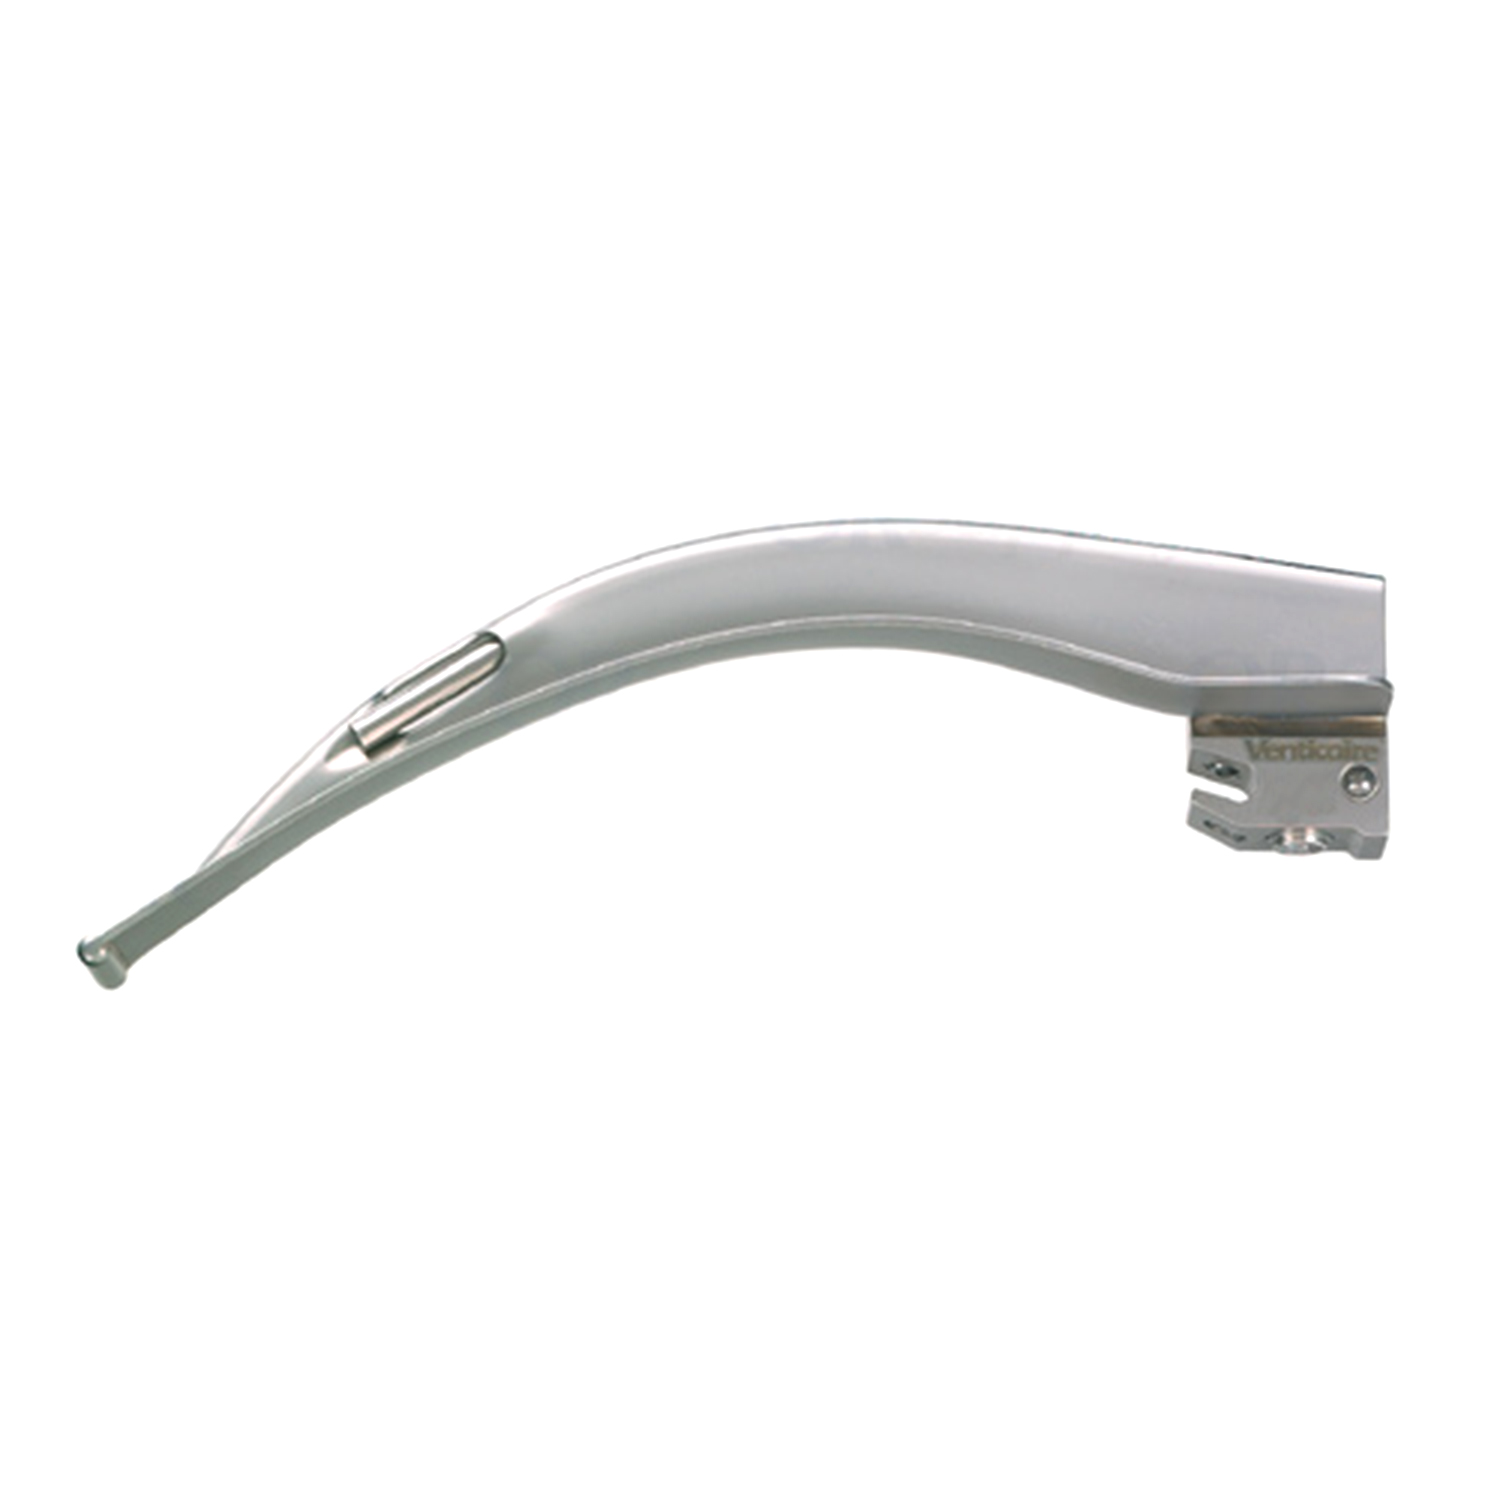 Flexicare Venticaire Fiber Optic Macintosh English Profile Laryngoscope Blades